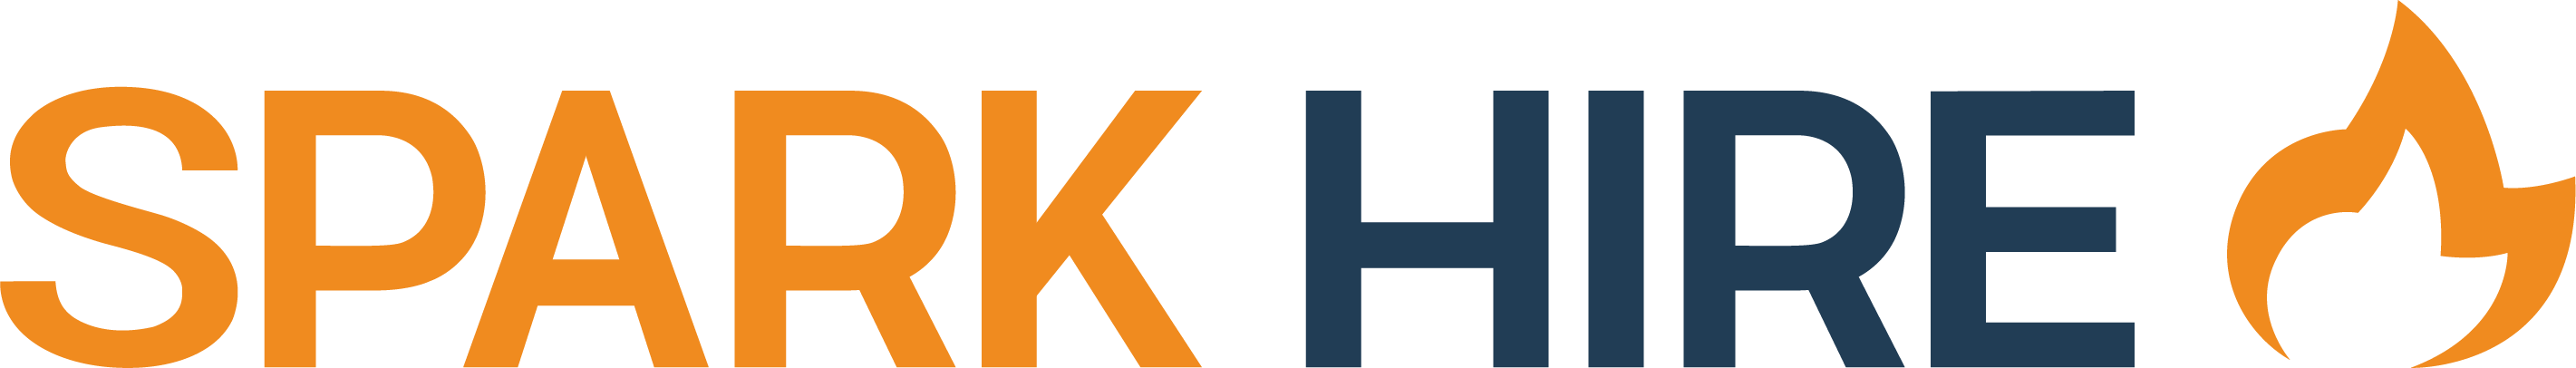 Spark Hire Logo - Orange and Blue